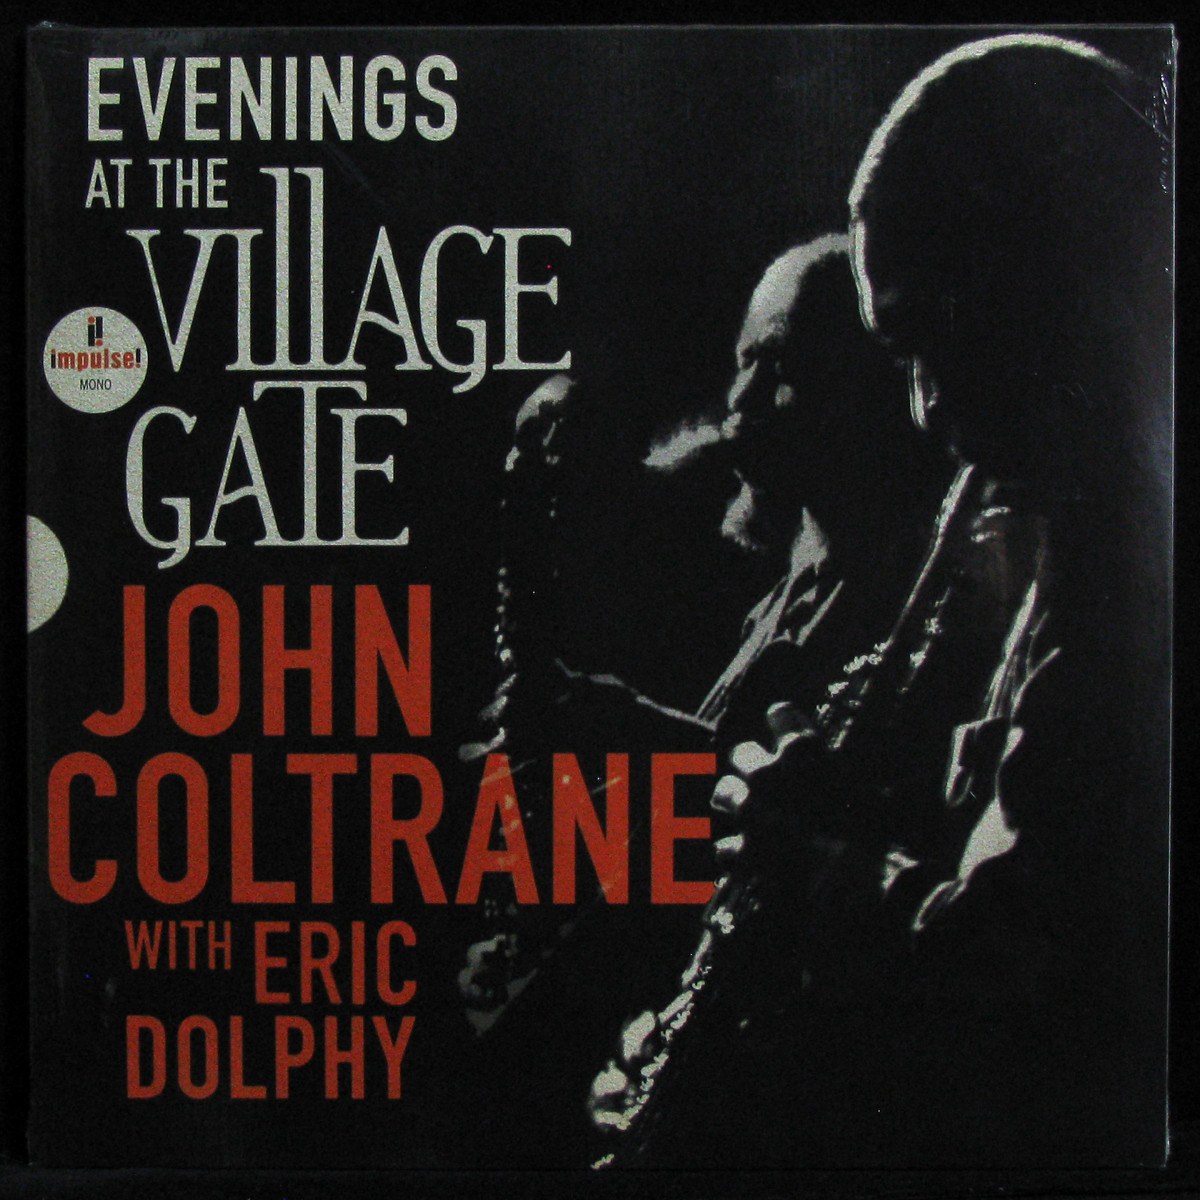 LP John Coltrane / Eric Dolphy — Evenings At The Village Gate (2LP, mono) фото